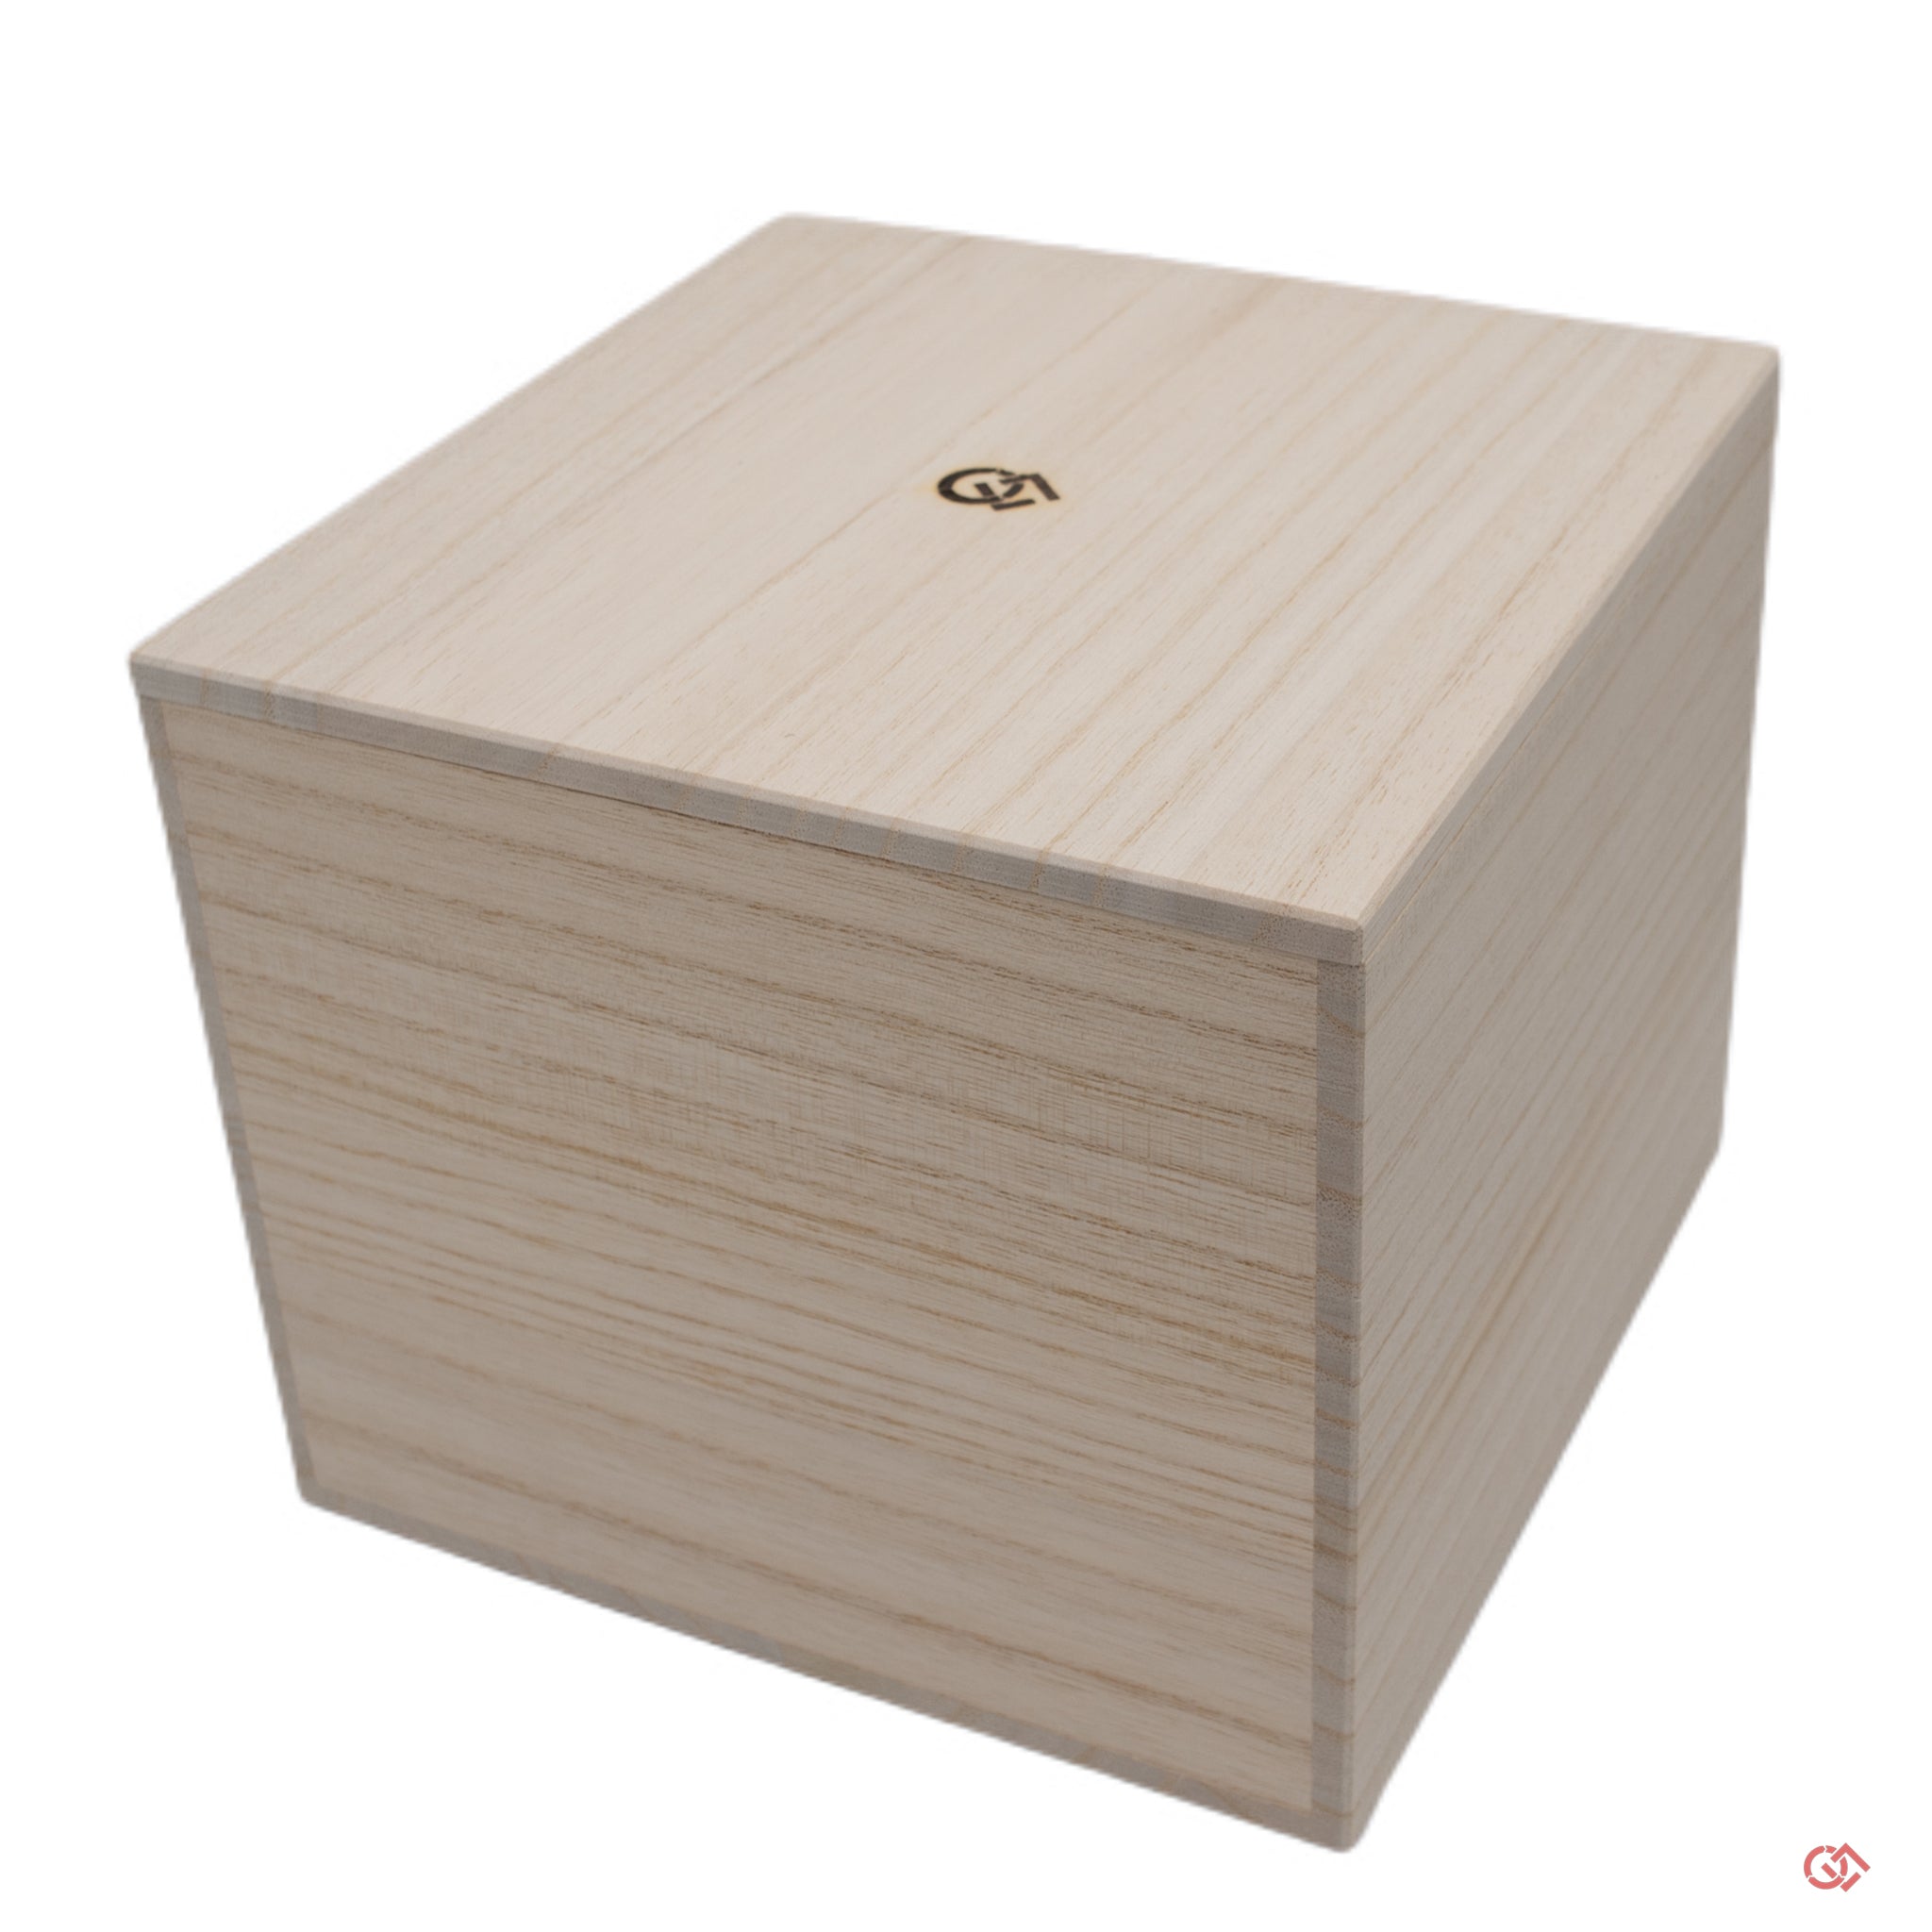 Paulownia box for Kintsugi pottery